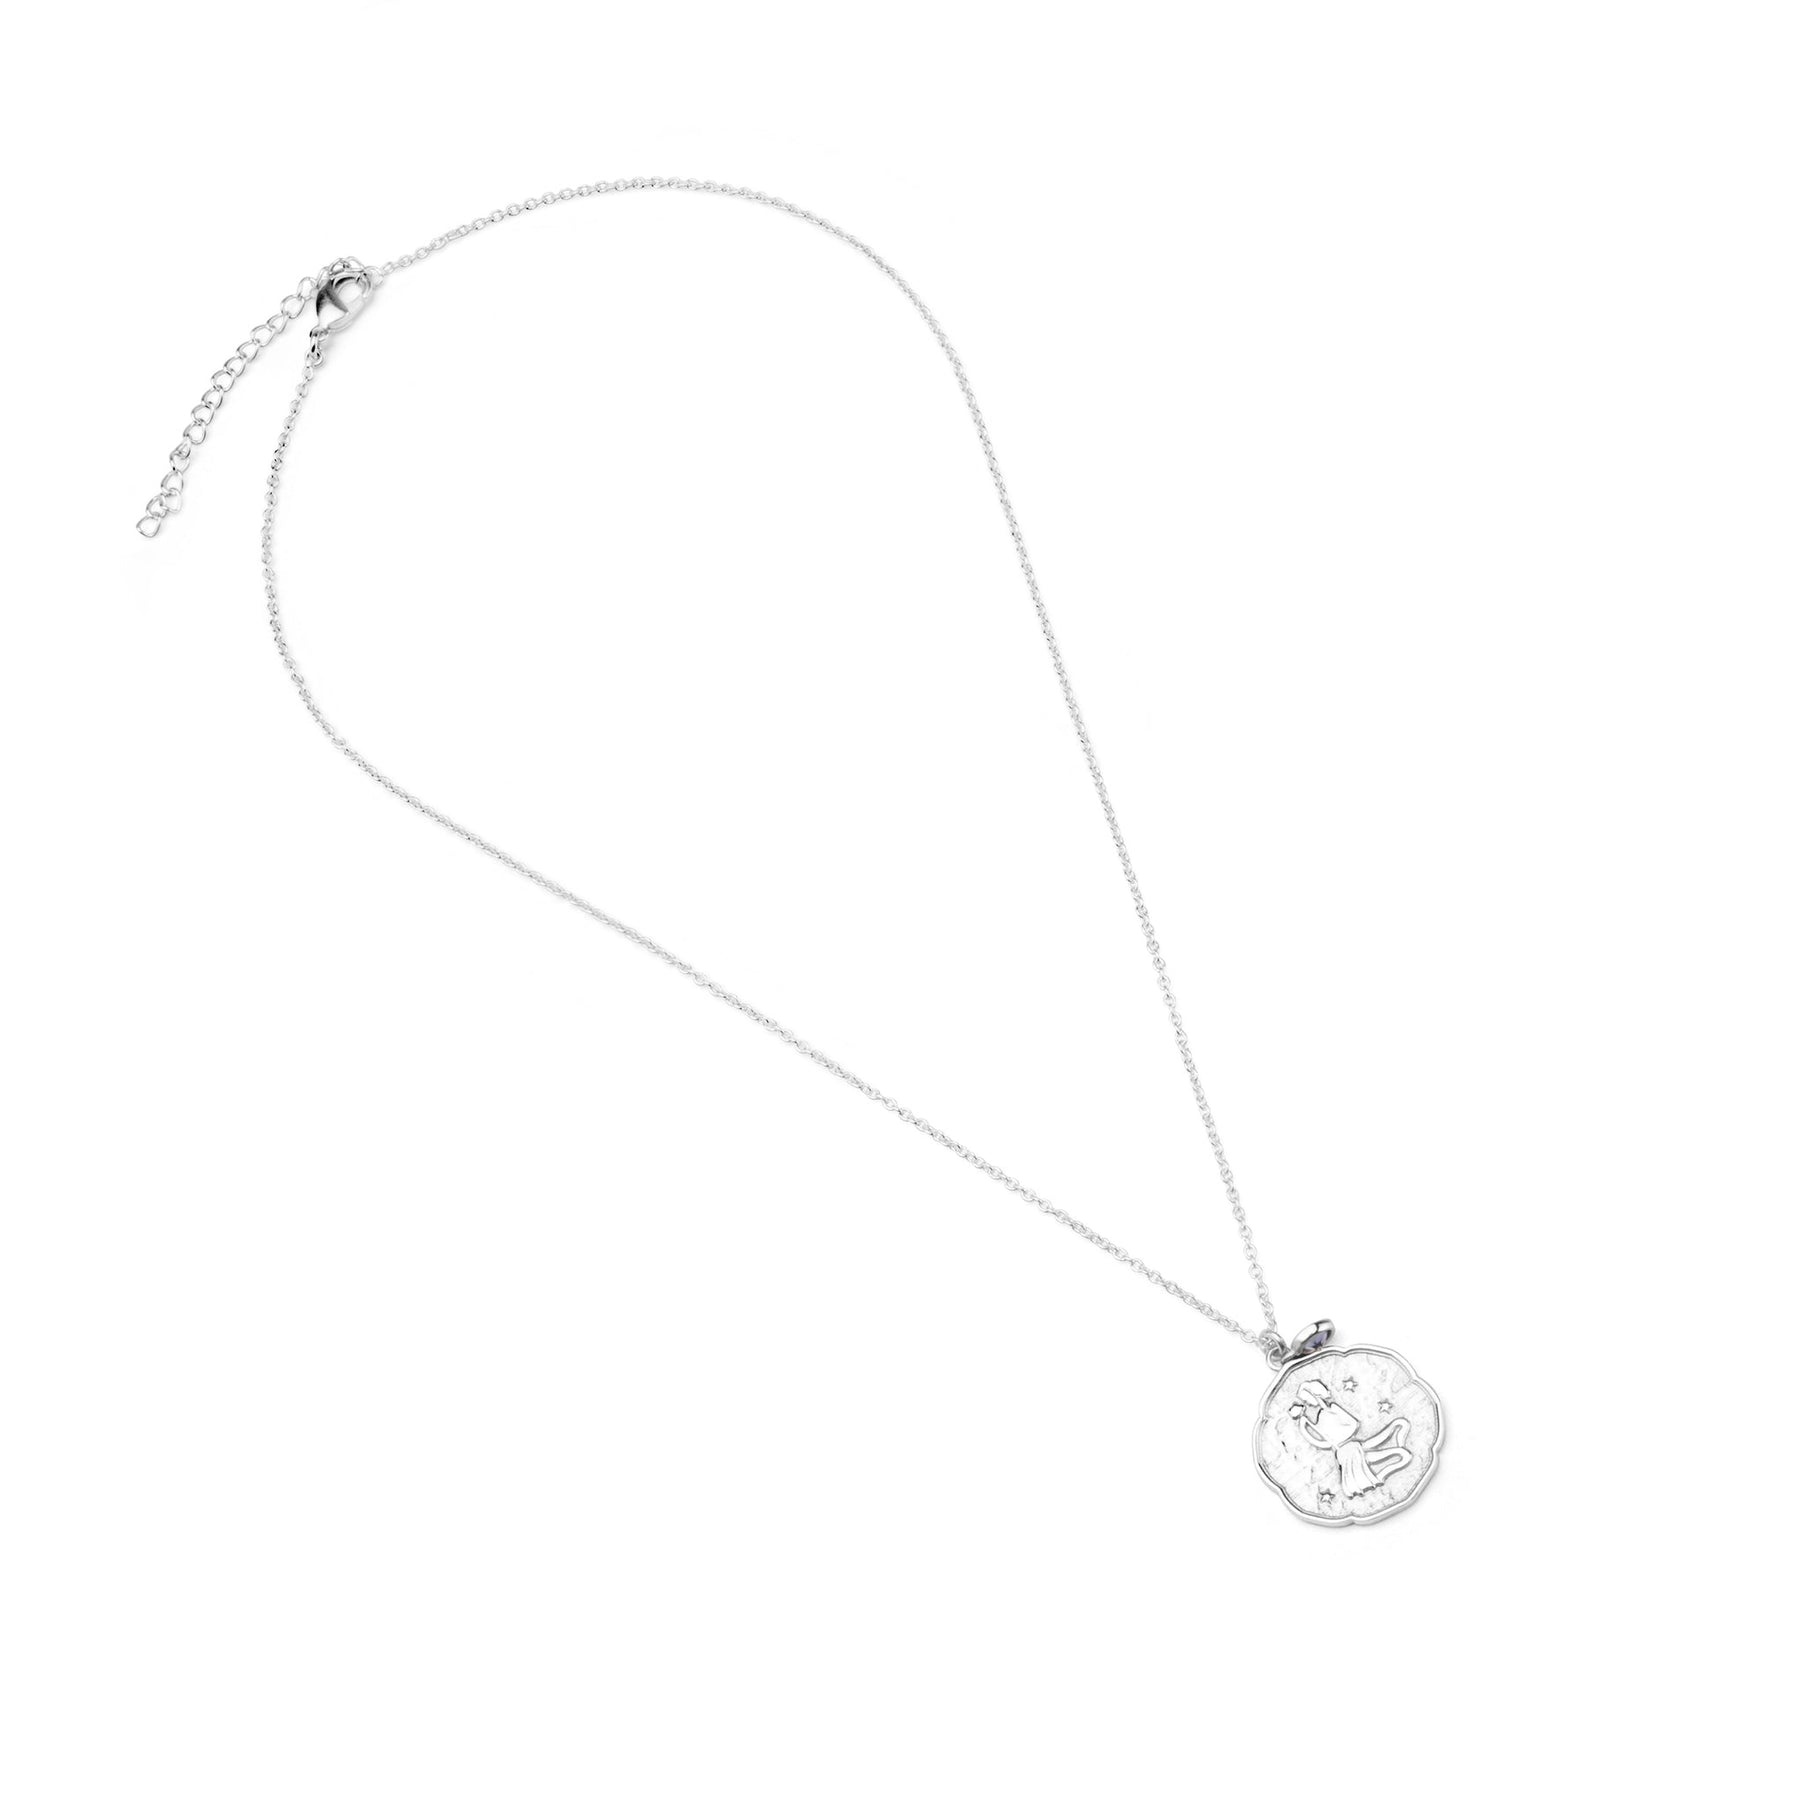 Virgo Necklace With Birth Stone Charm